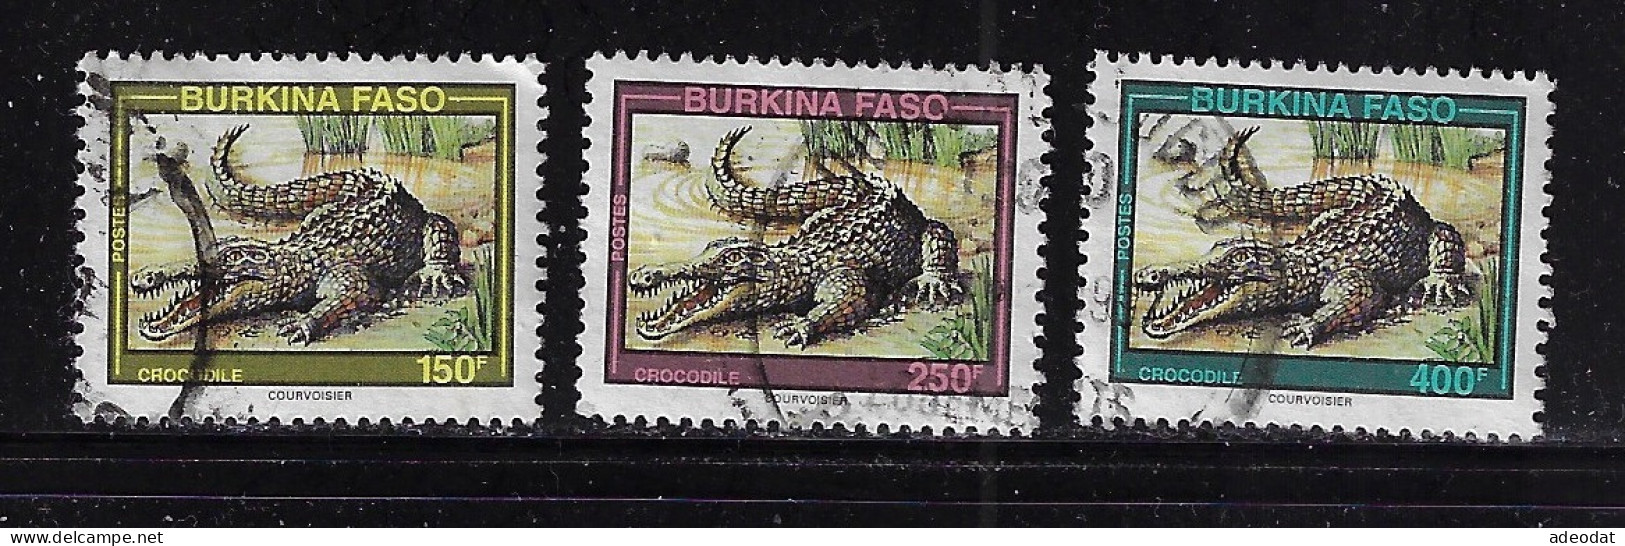 BURKINA FASO 1995  SCOTT#1002,1004,1005 USED - Burkina Faso (1984-...)